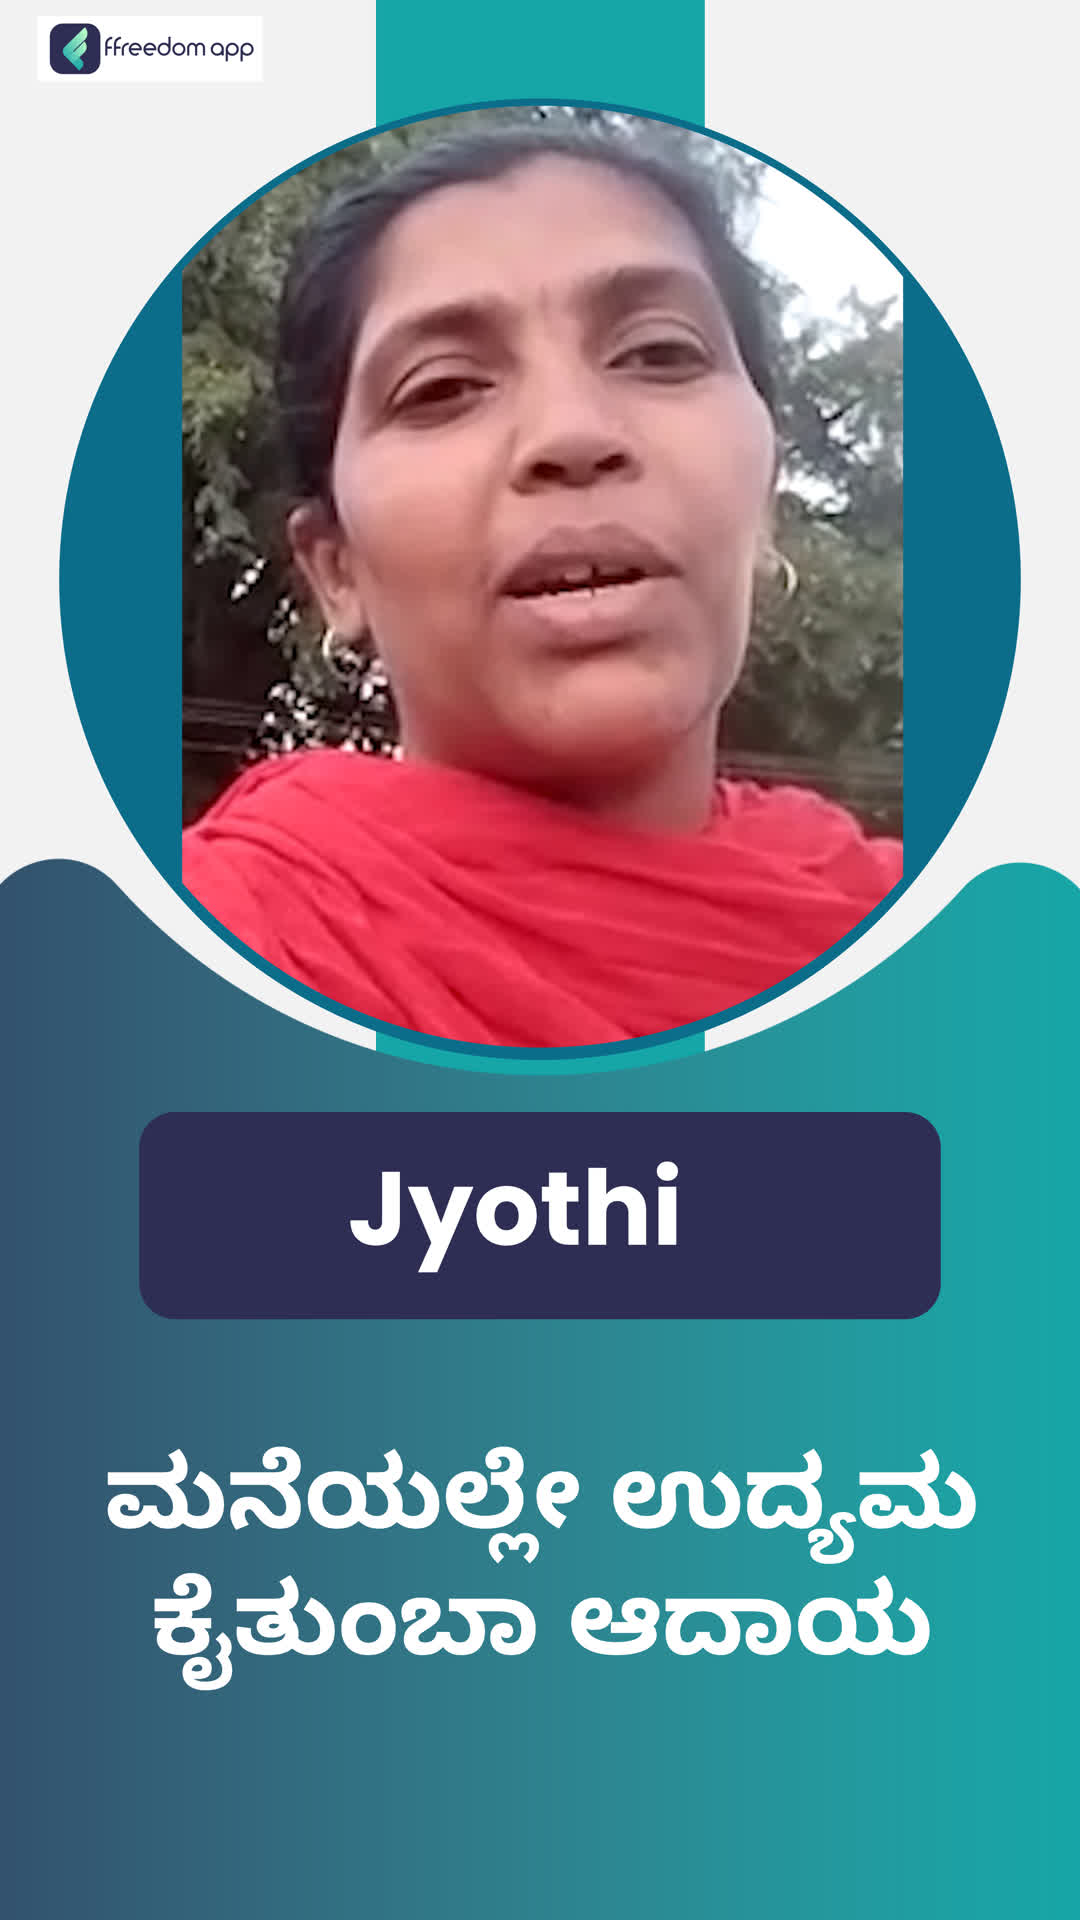 Jyothi Jyothi's Honest Review of ffreedom app - Tumakuru ,Karnataka